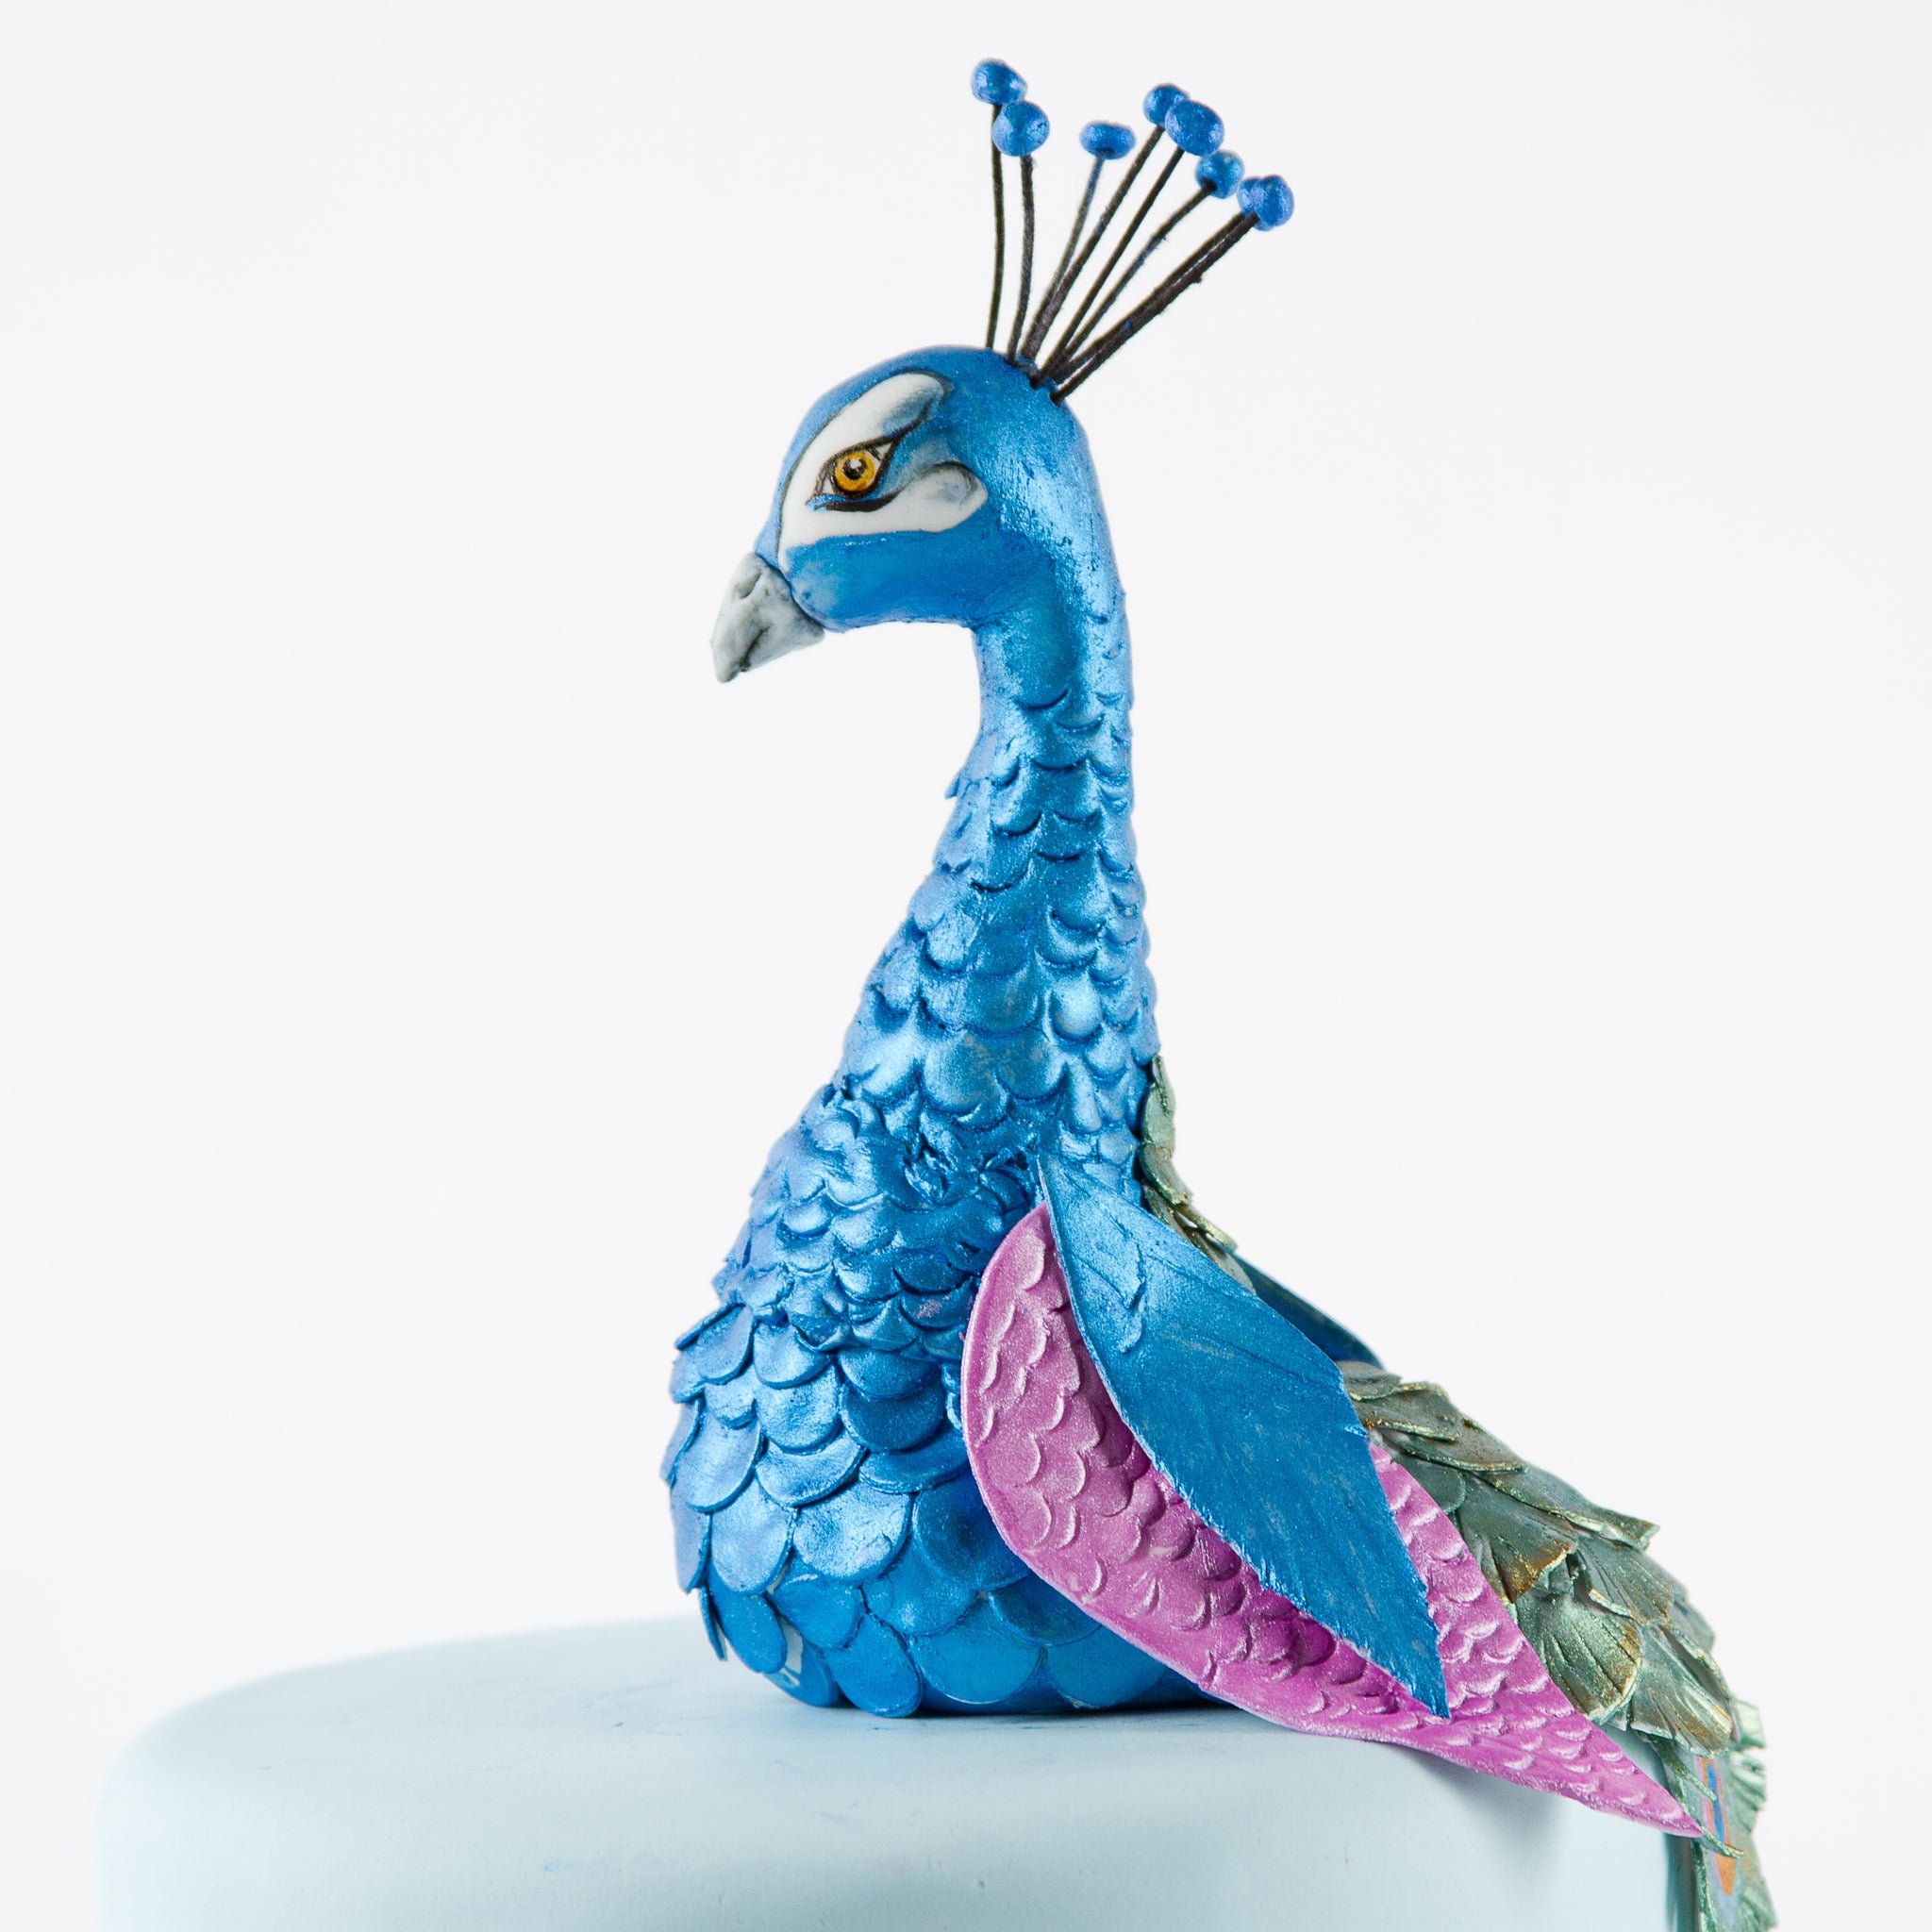 Peacock Feather Texture Sheet Set – Summit Baking Supplies